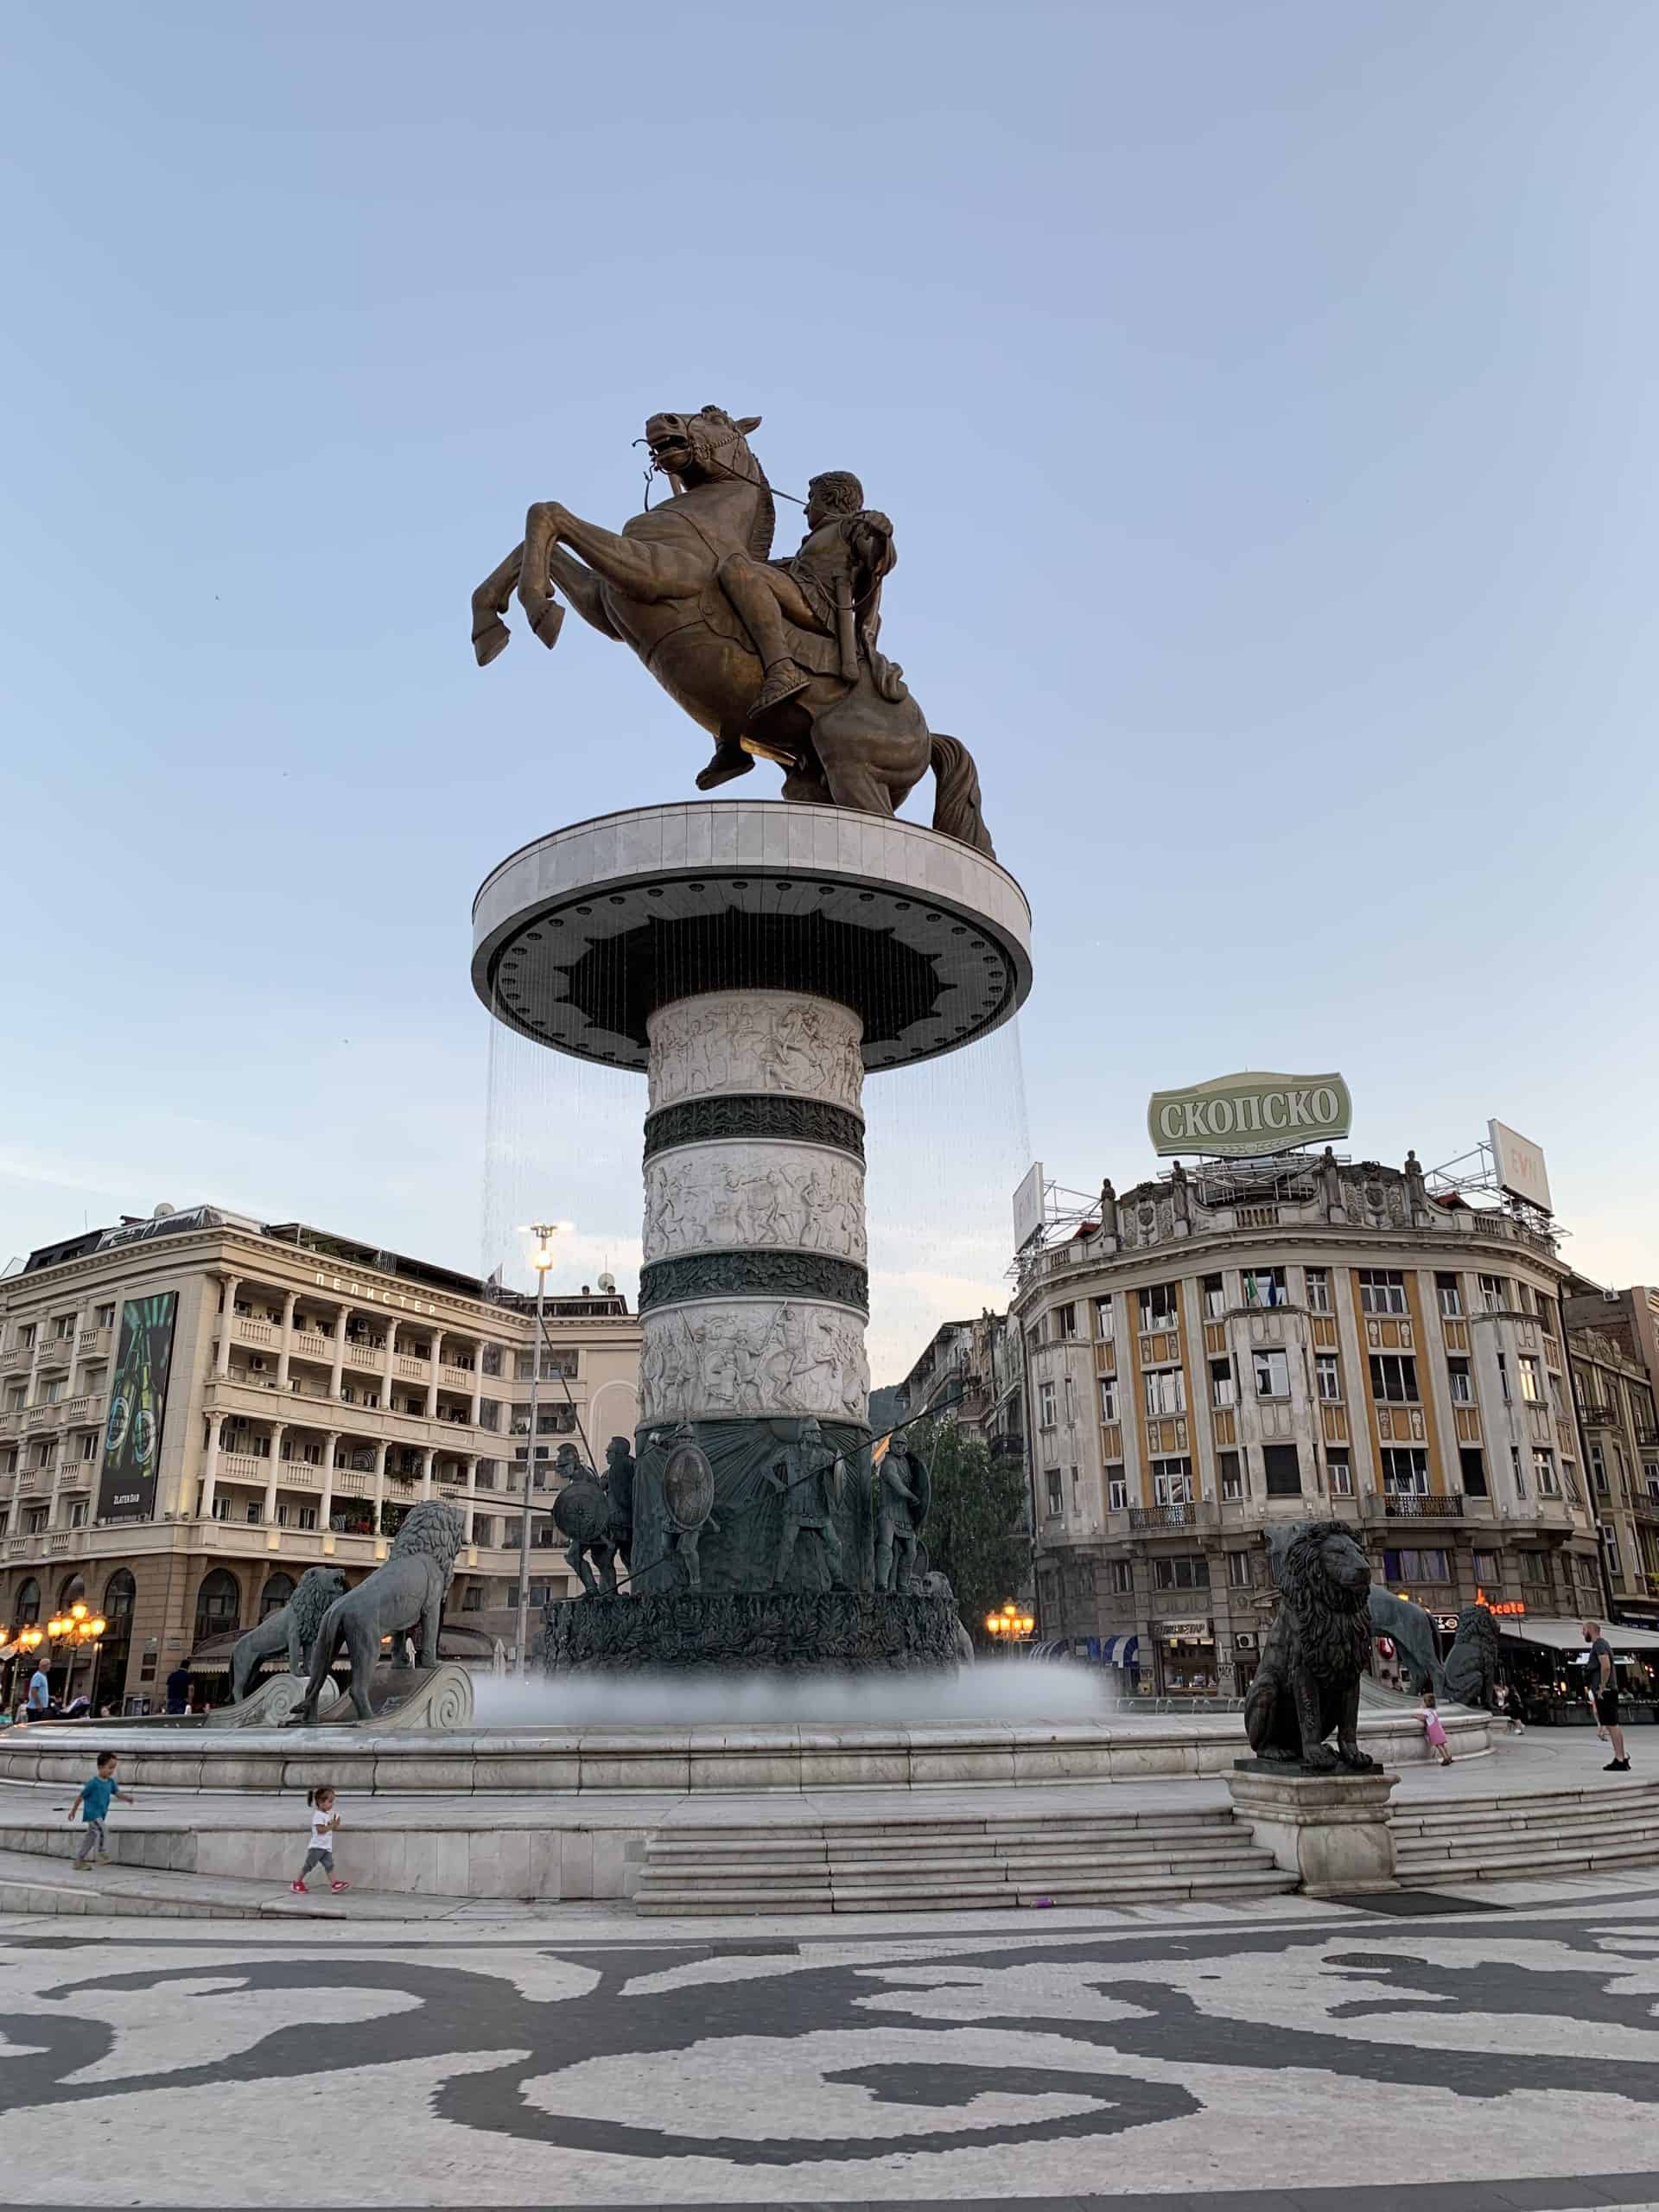 Macedonia Square and the Stone Bridge – Skopje